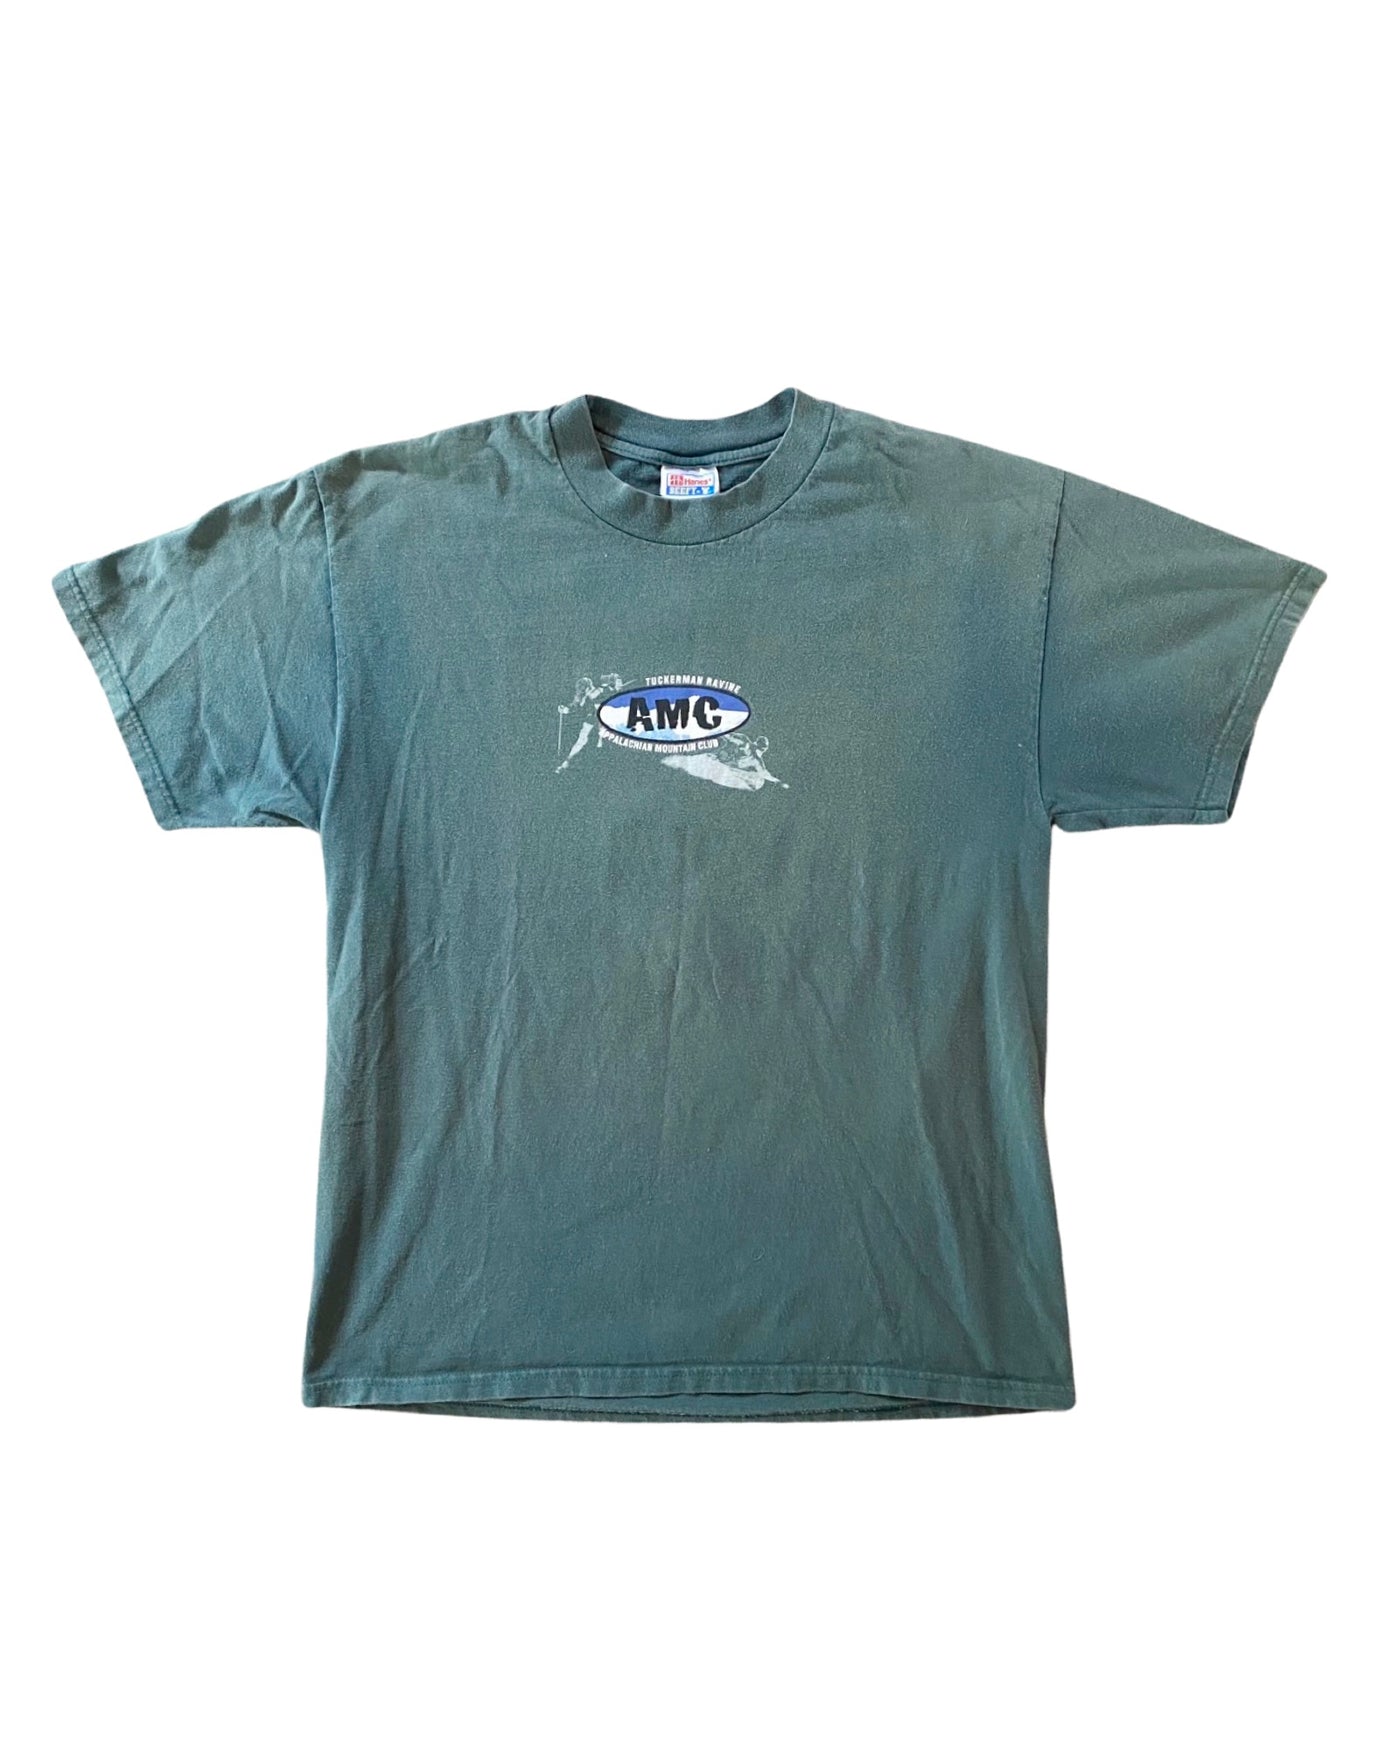 Vintage 90s Tuckerman’s Ravine AMC T-Shirt